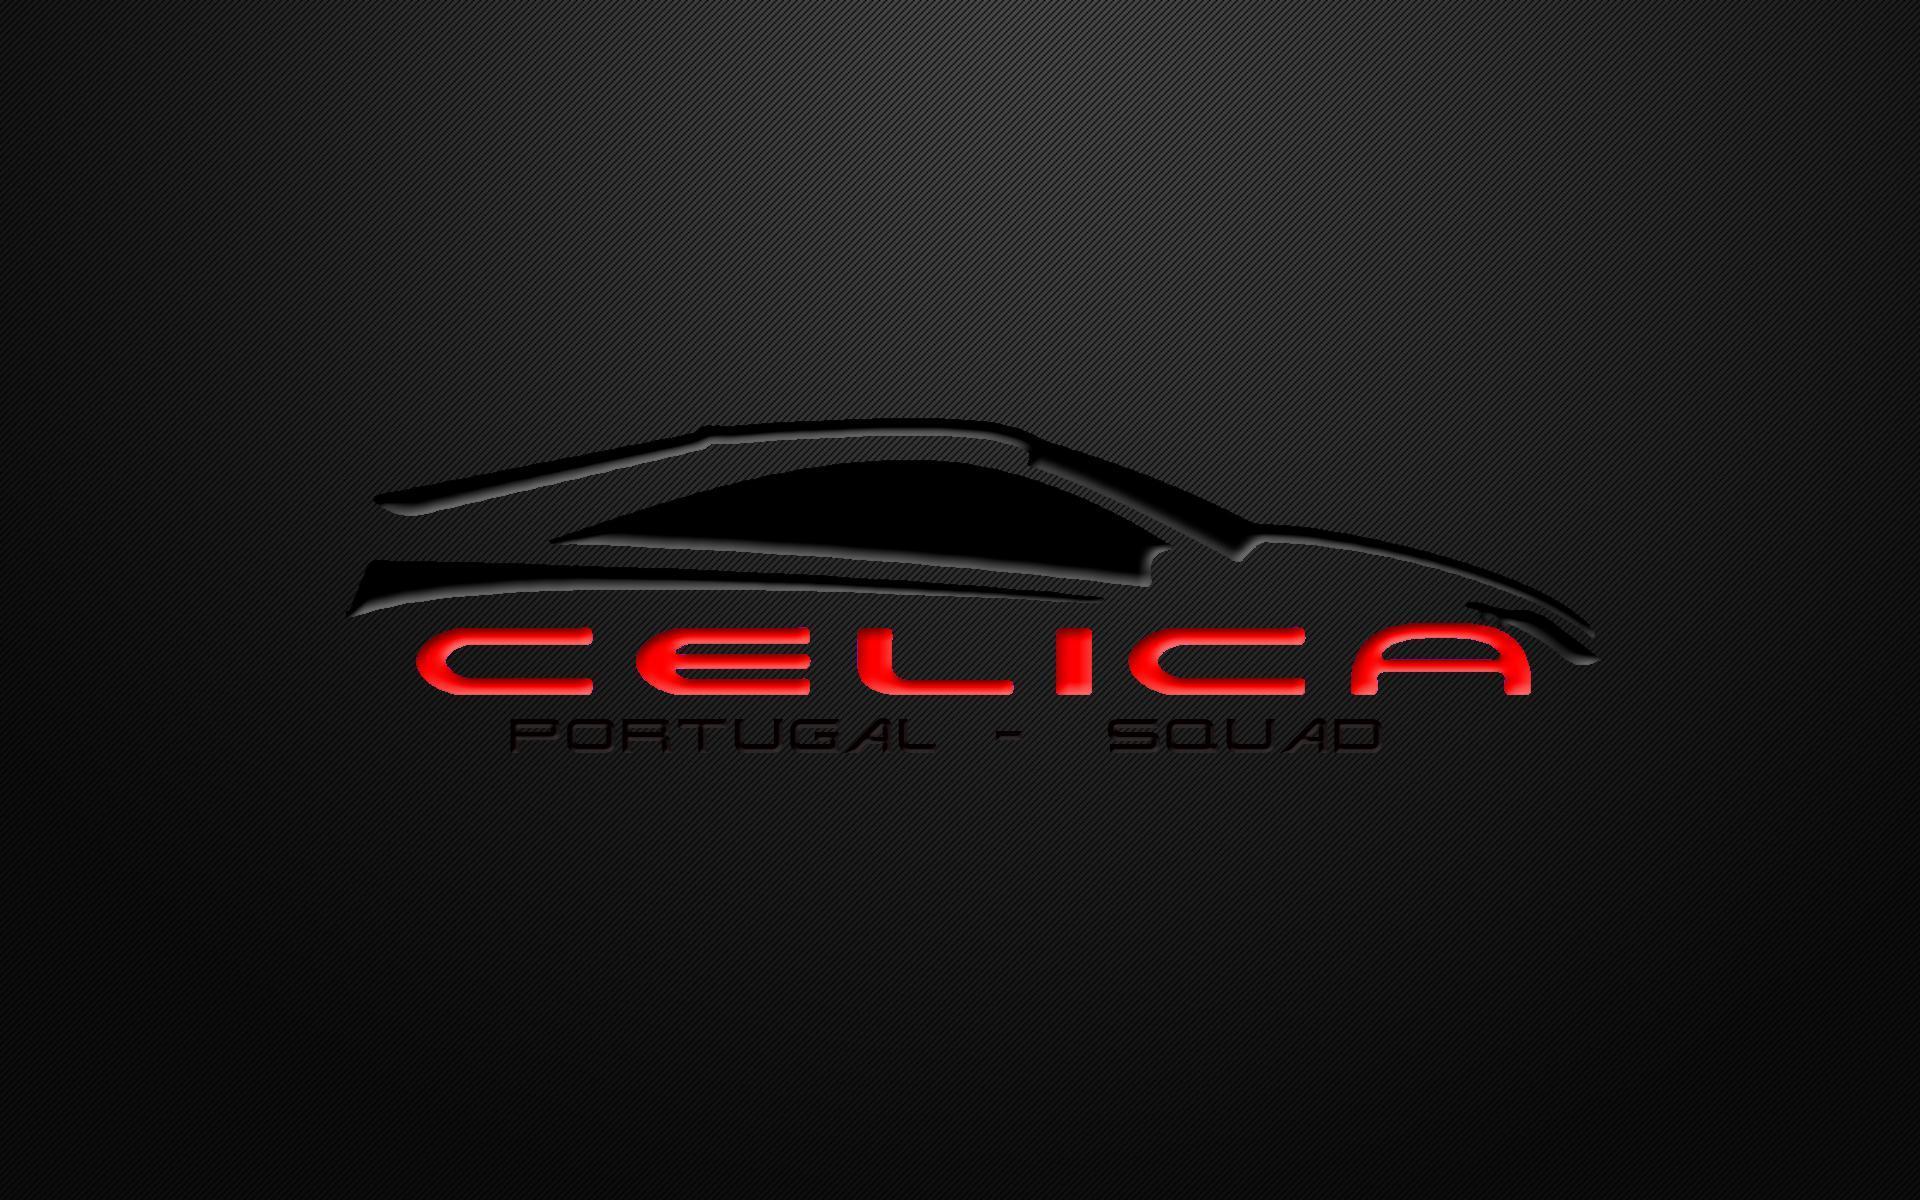 AmazingPict.com. Toyota Celica Portugal Squad Wallpaper